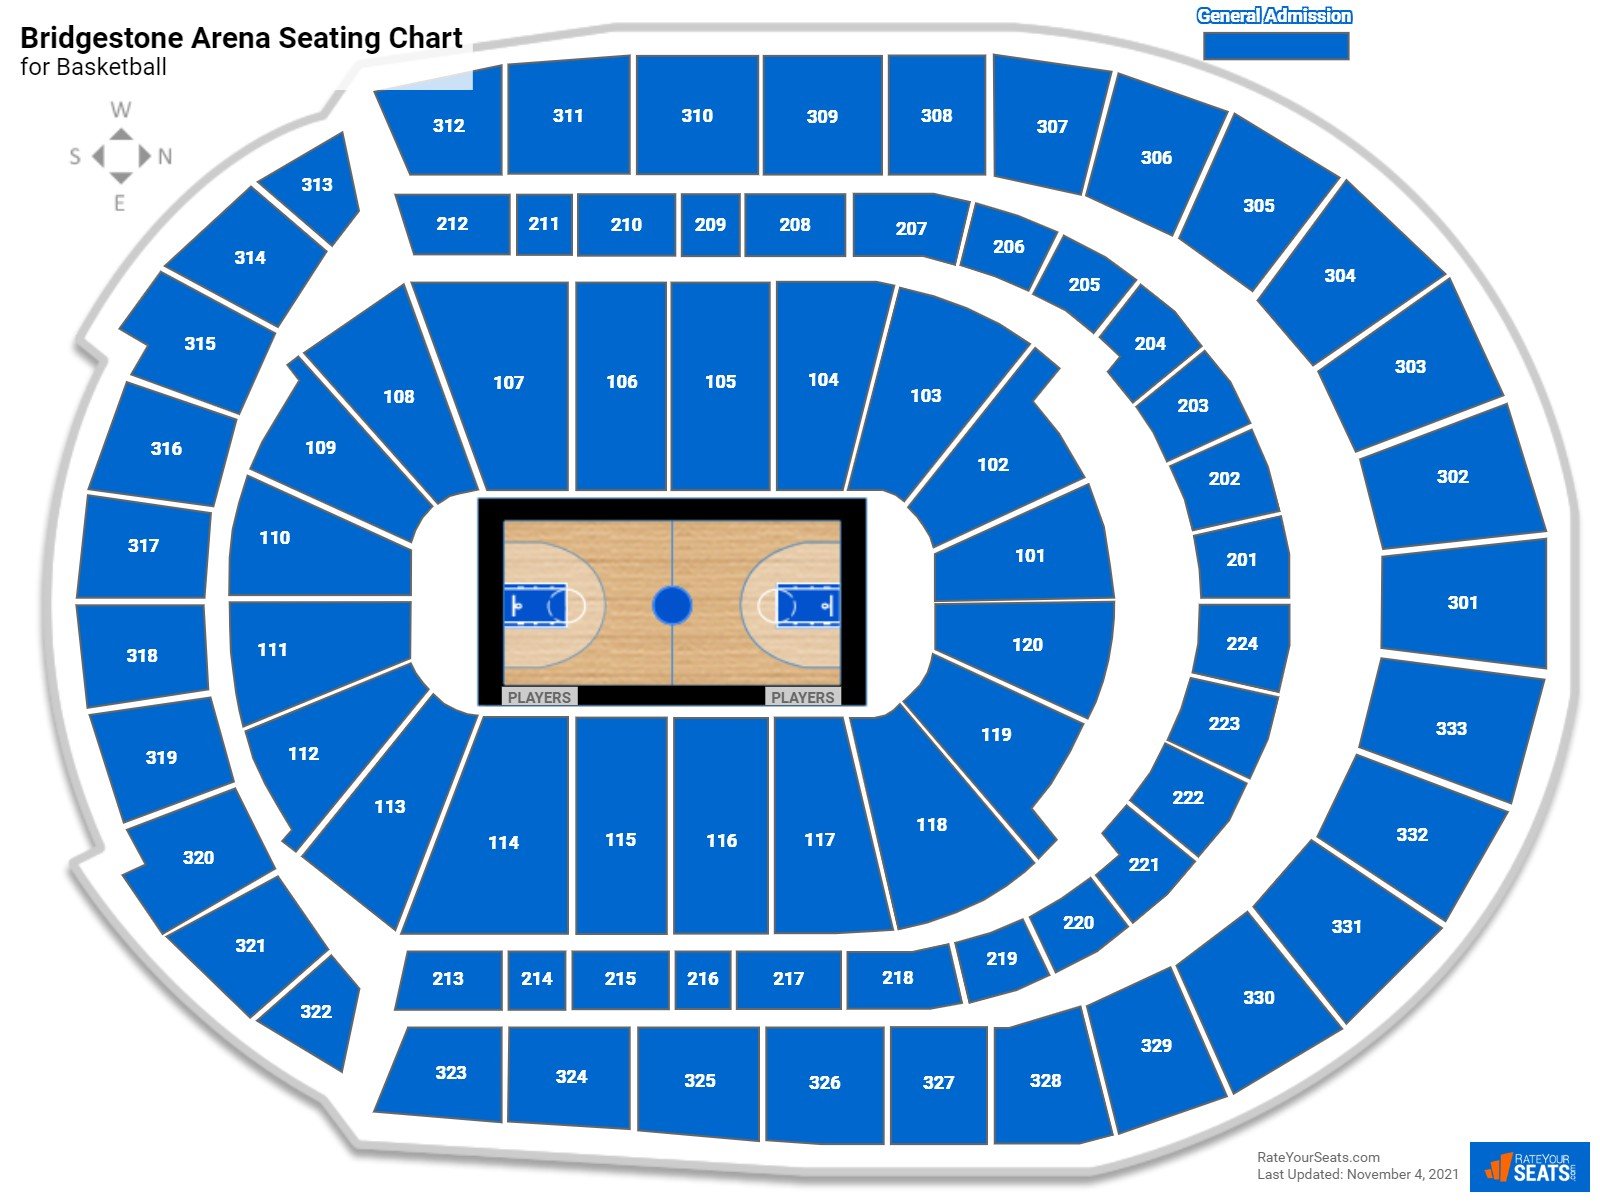 Bridgestone Arena Seating Charts For Concerts Rateyourseats Com